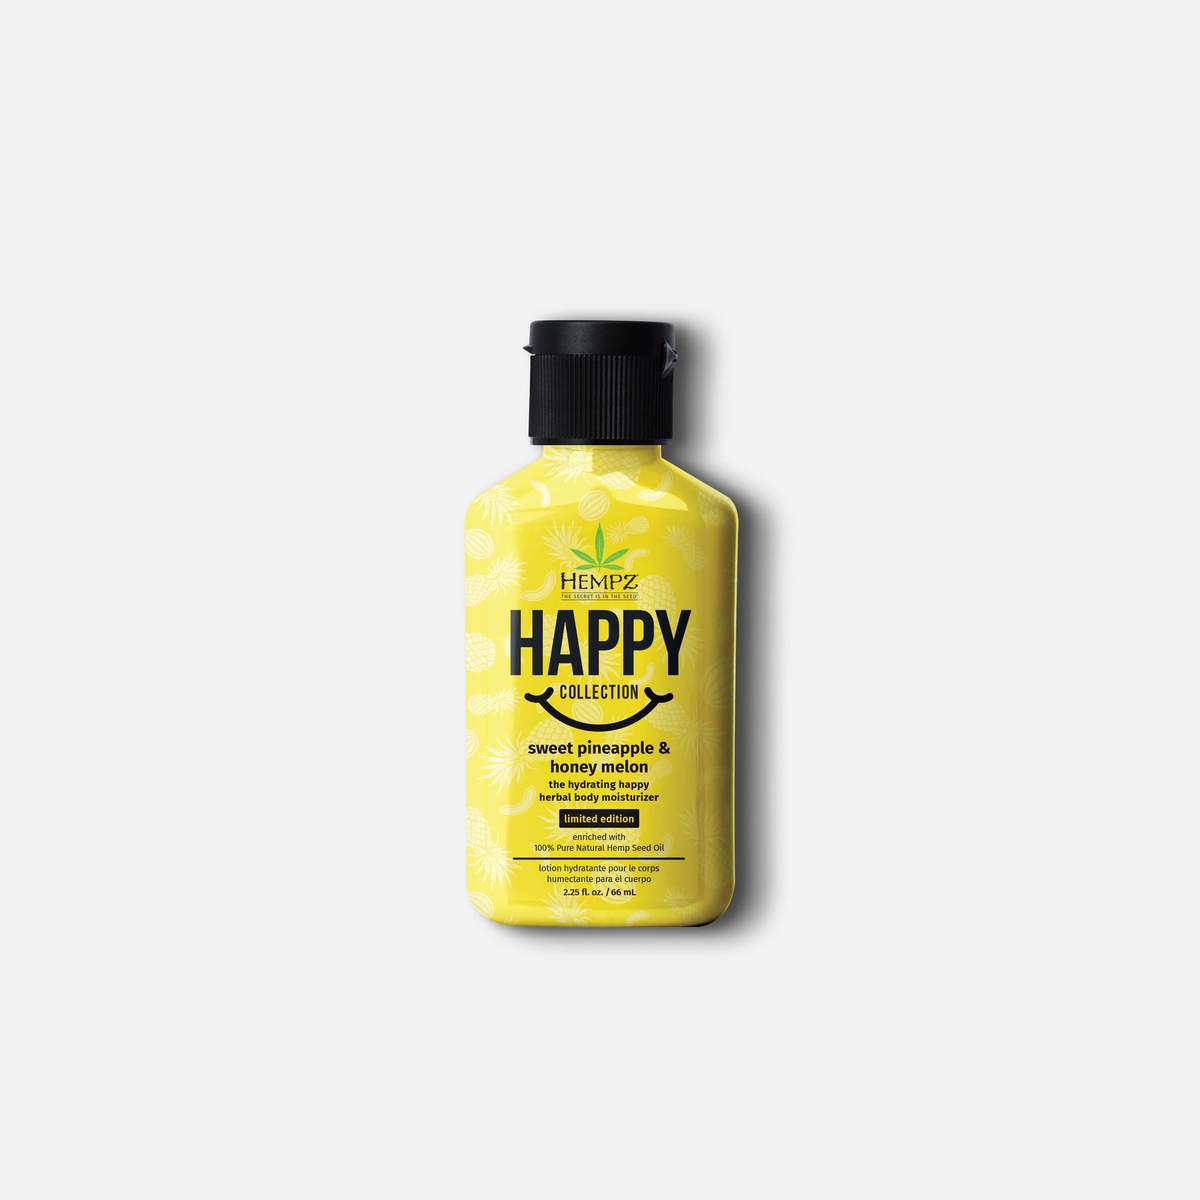 Hempz Happy Stash-Hempz-Brand_Hempz,Collection_Bath and Body,Collection_Gifts,Collection_Makeup,Skincare_Lip Treatments